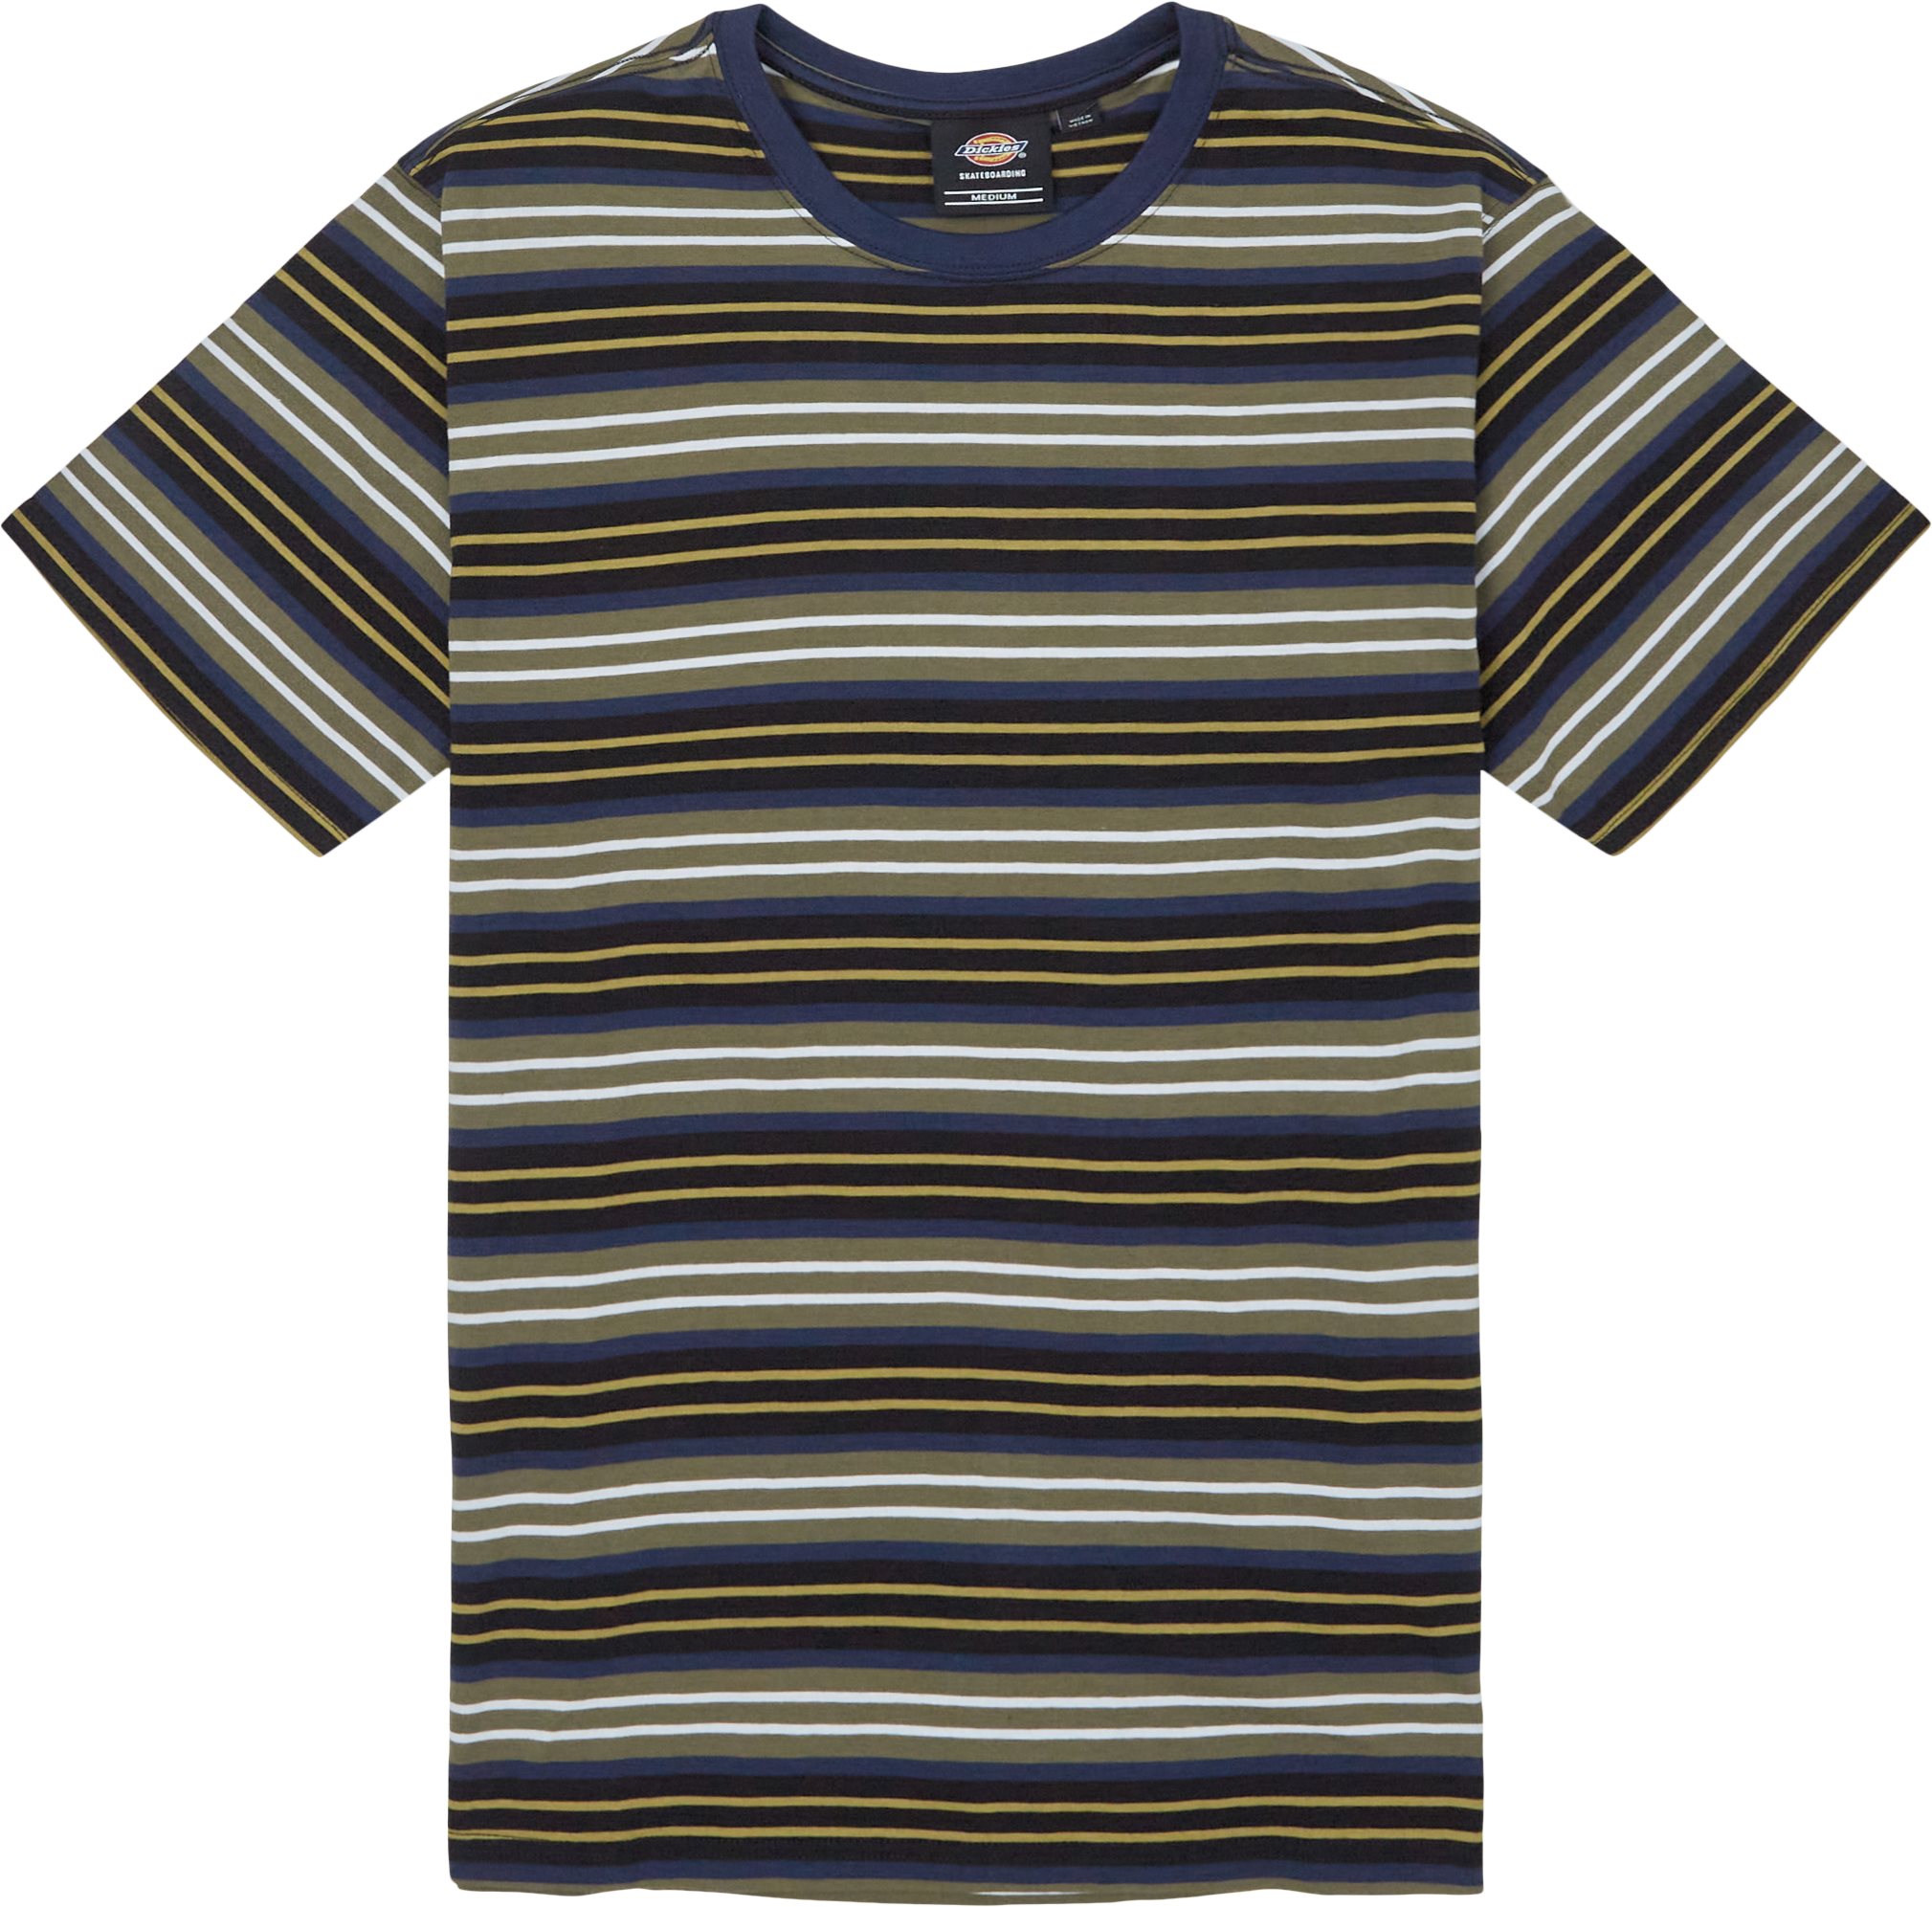 Bothell Stripe Tee - T-shirts - Regular fit - Sort